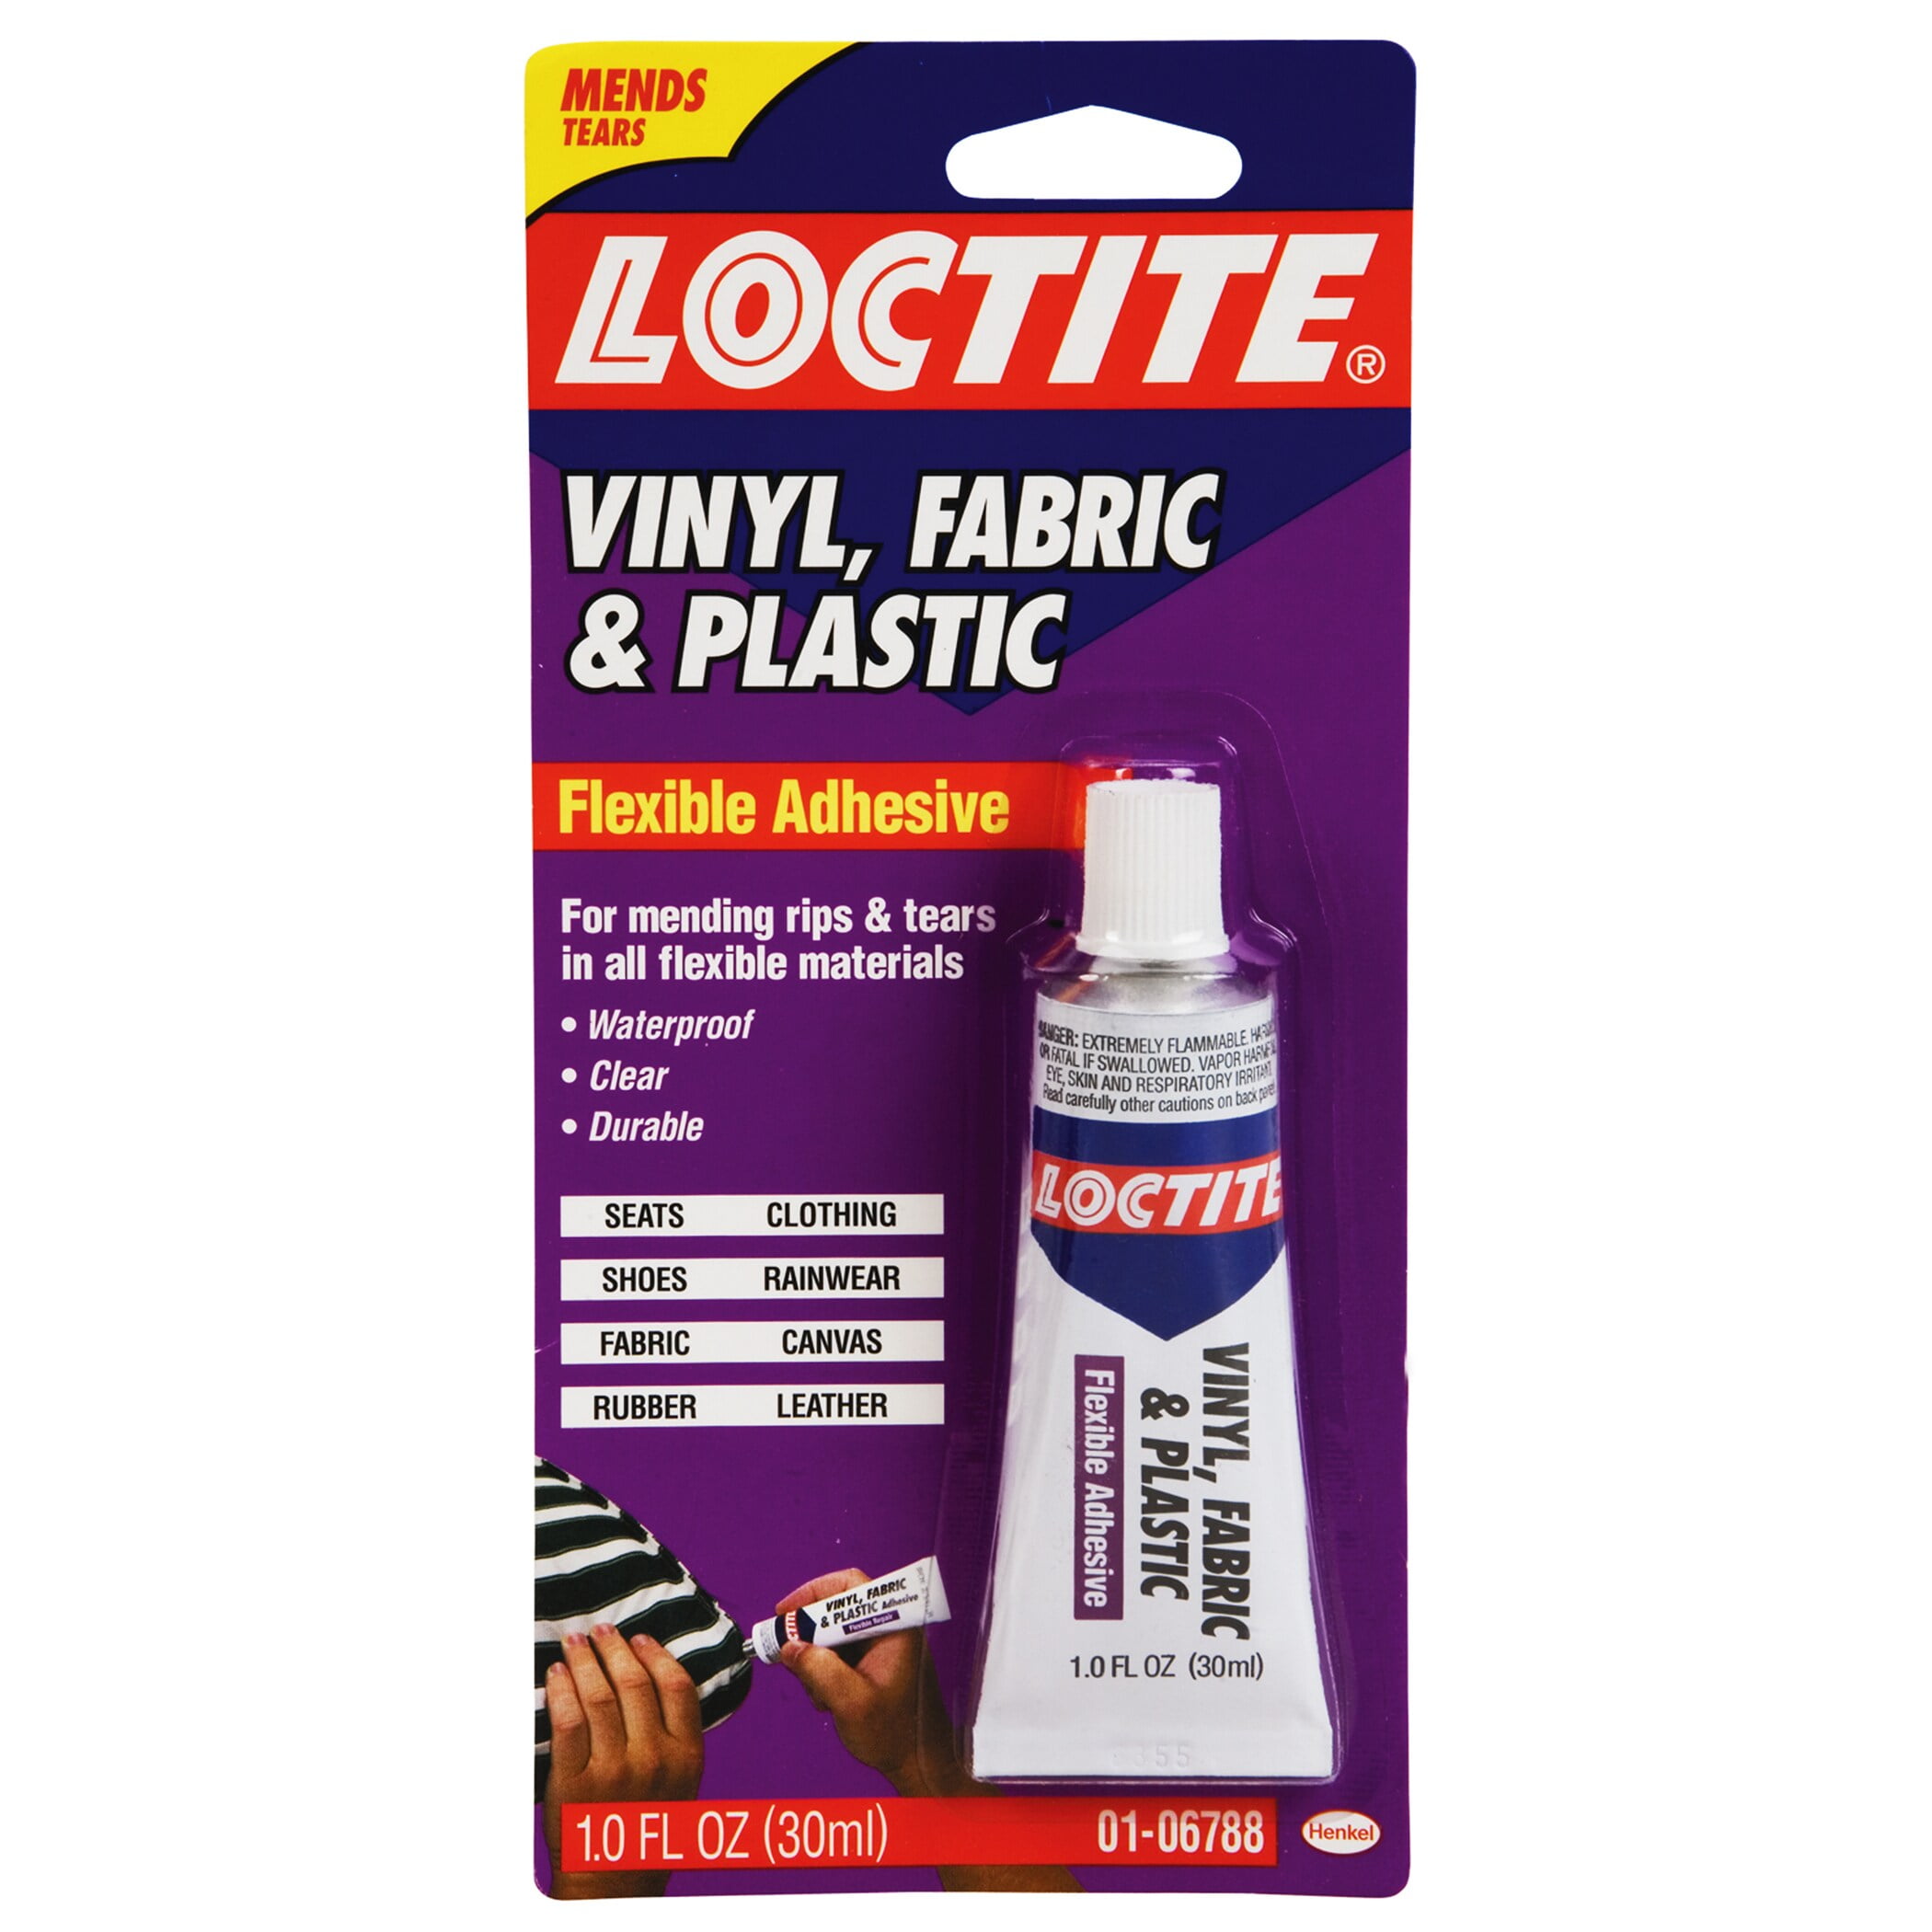 Loctite Vinyl, Fabric, and Plastic Flexible Adhesive, 1 Ounce - 3count:  : Industrial & Scientific